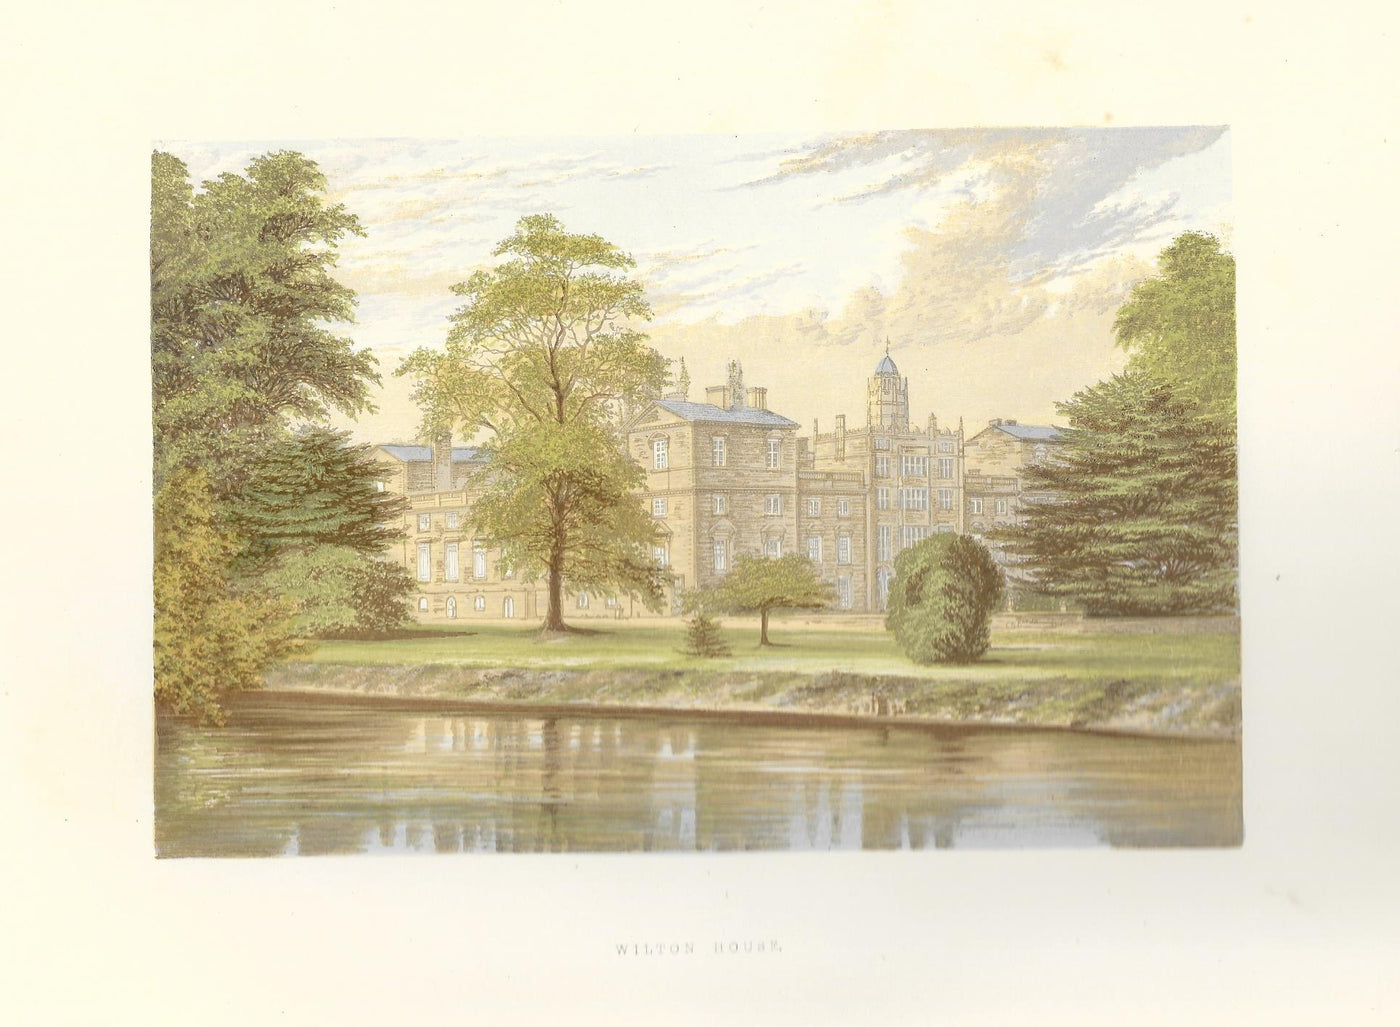 Wilton House Wiltshire guaranteed antique print 1880